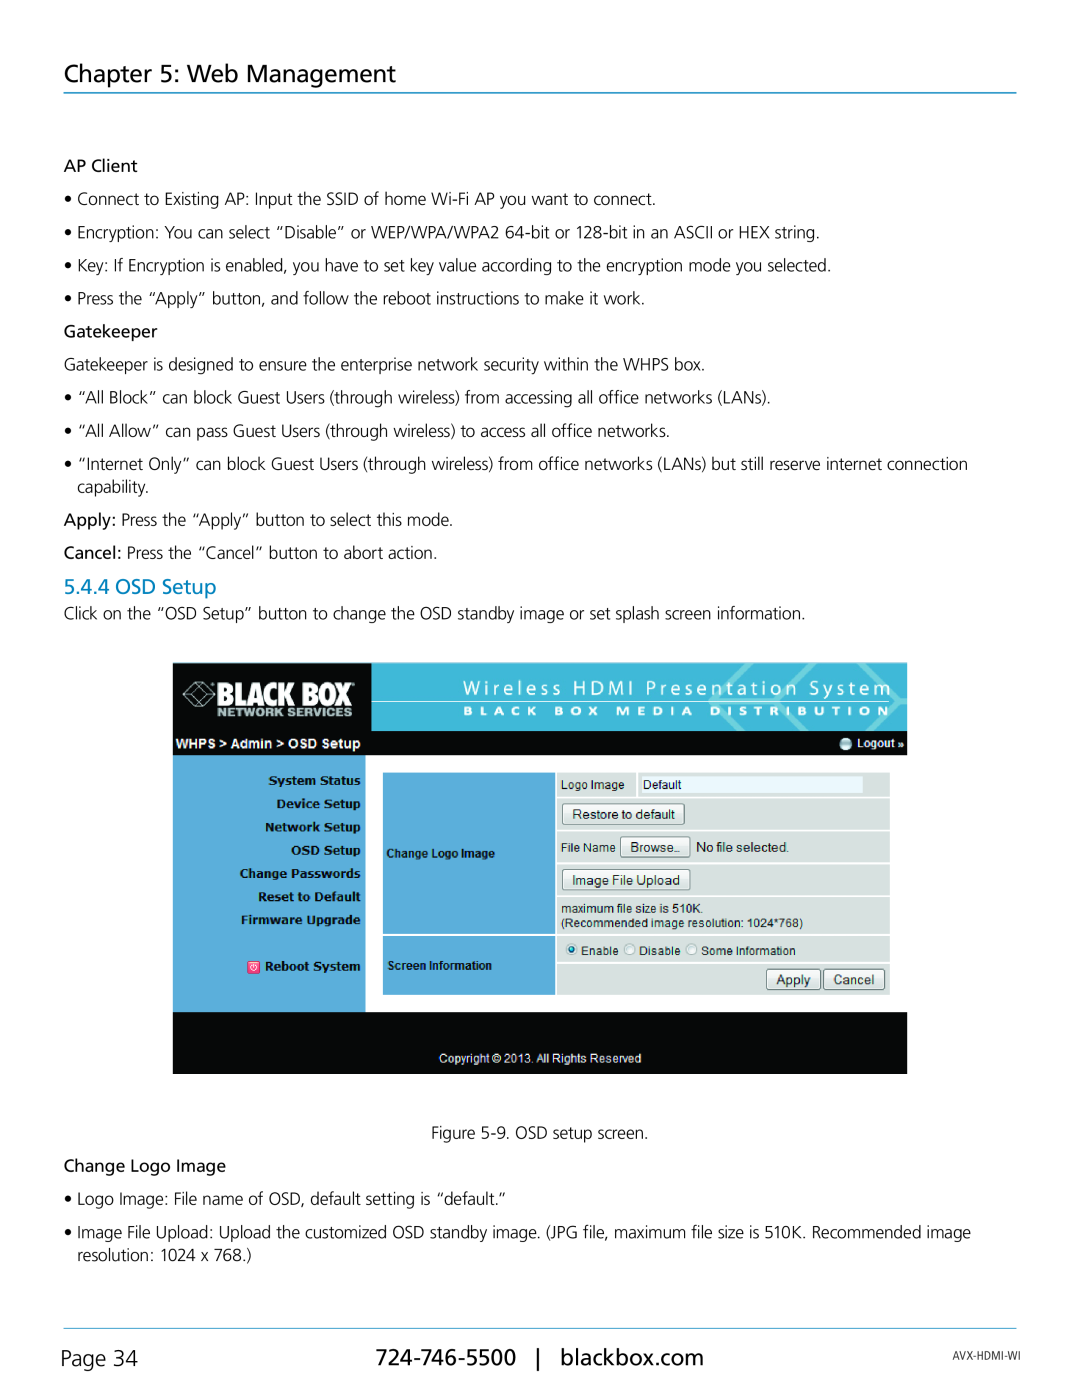 Black Box AVX-HDMI-WI, Wireless HDMI Presentation System (WHPS) manual OSD Setup, Web Management, Page 